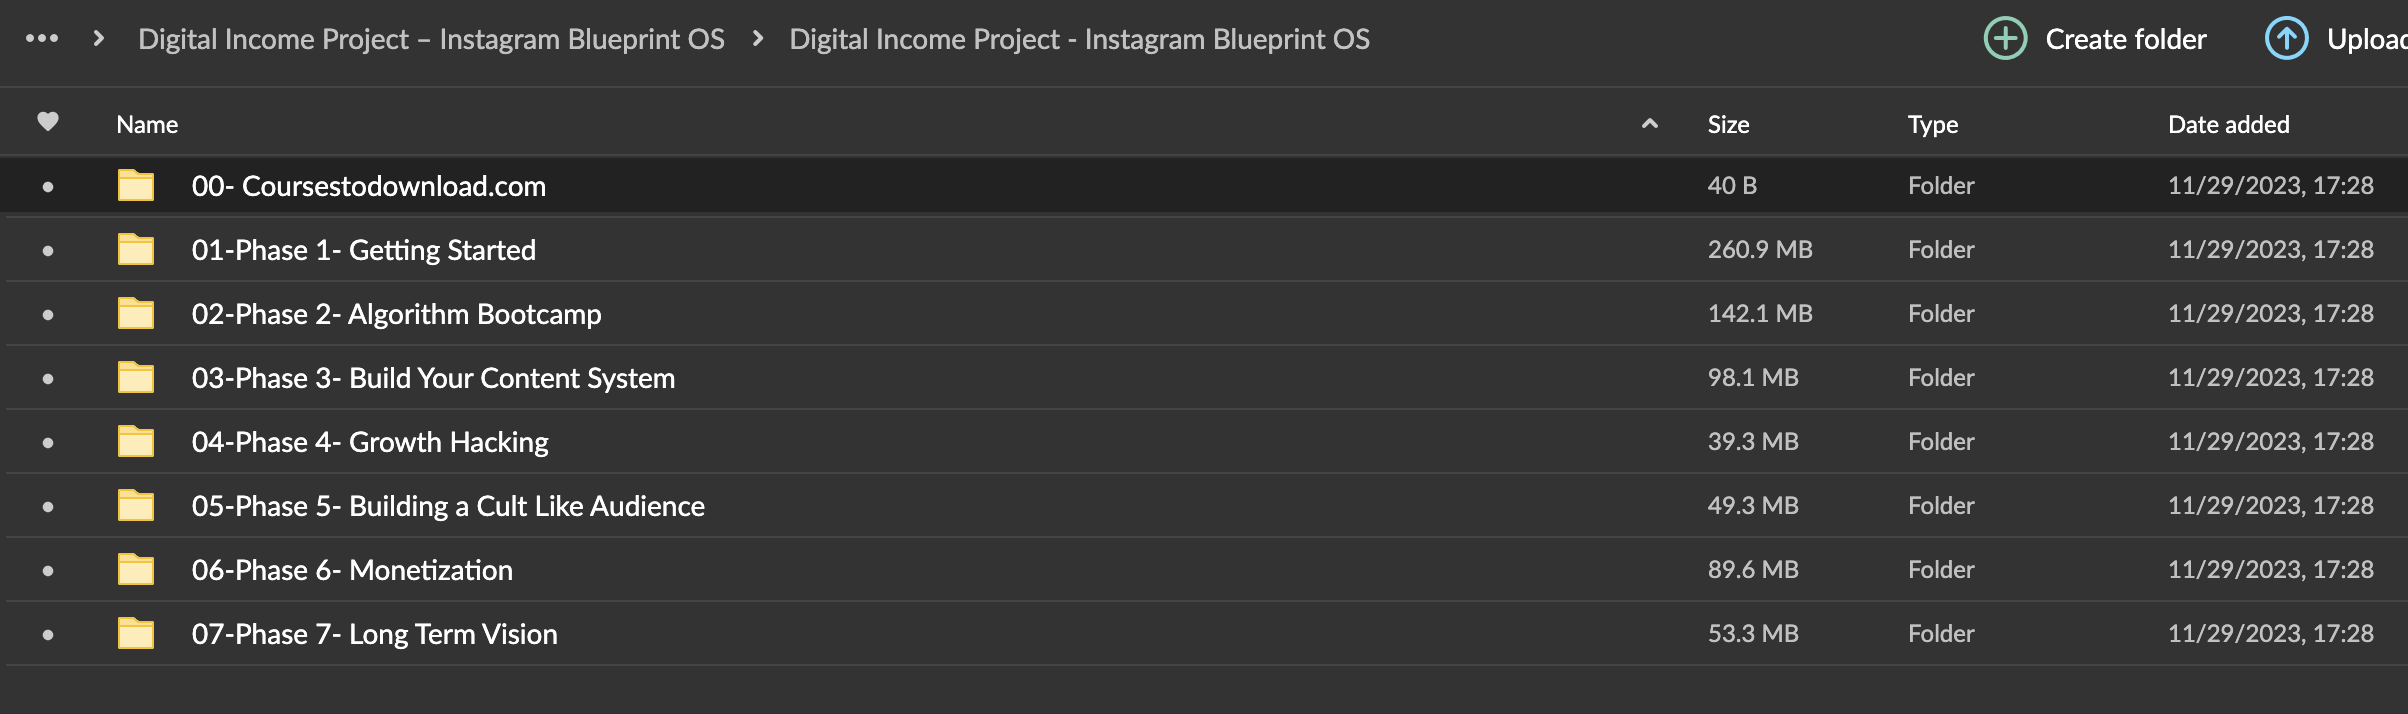 Digital Income Project – Instagram Blueprint OS Download